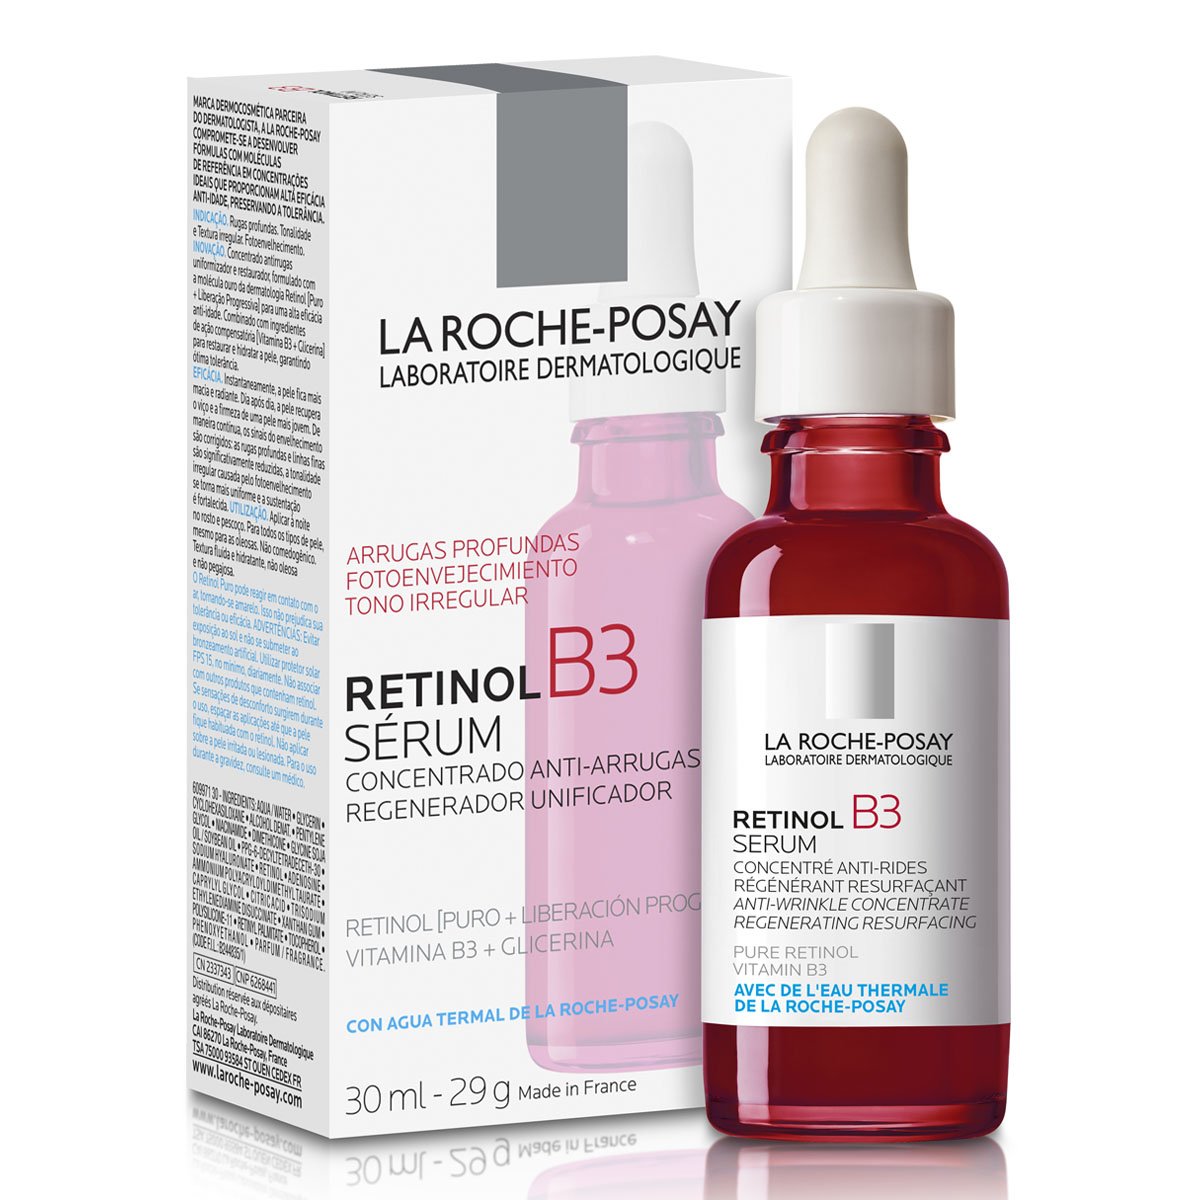 La Roche Posay Retinol B3 Anti-Aging and Anti-Wrinkle Serum 30 ml - image 2 of 3